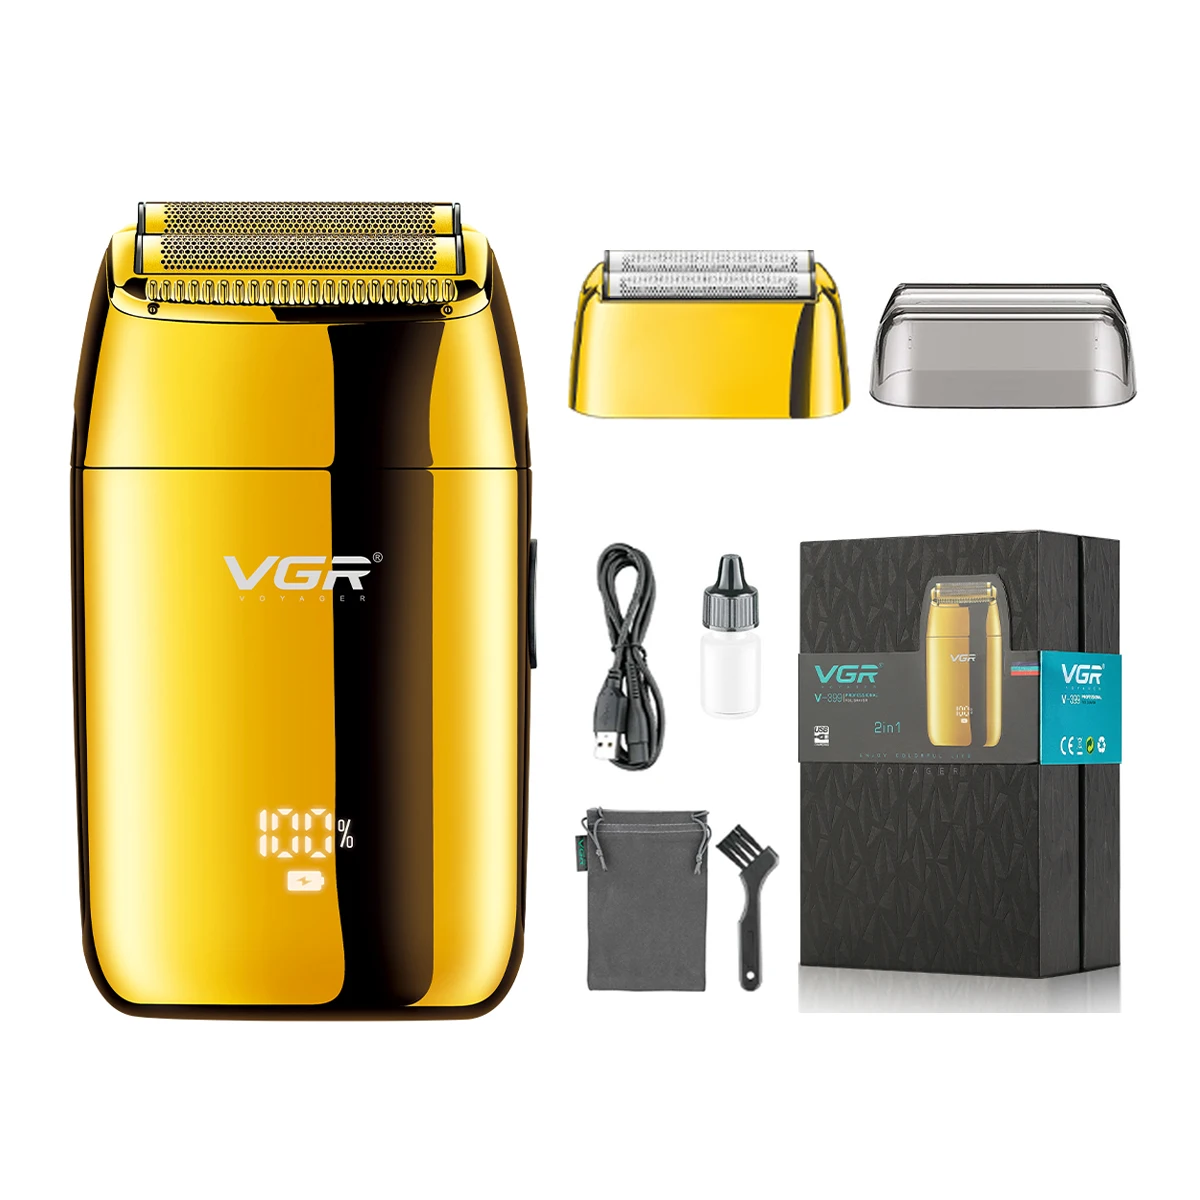 

VGR V-399 metal golden electric sahvers professional rechargeable usb charging face body razor shaver for men